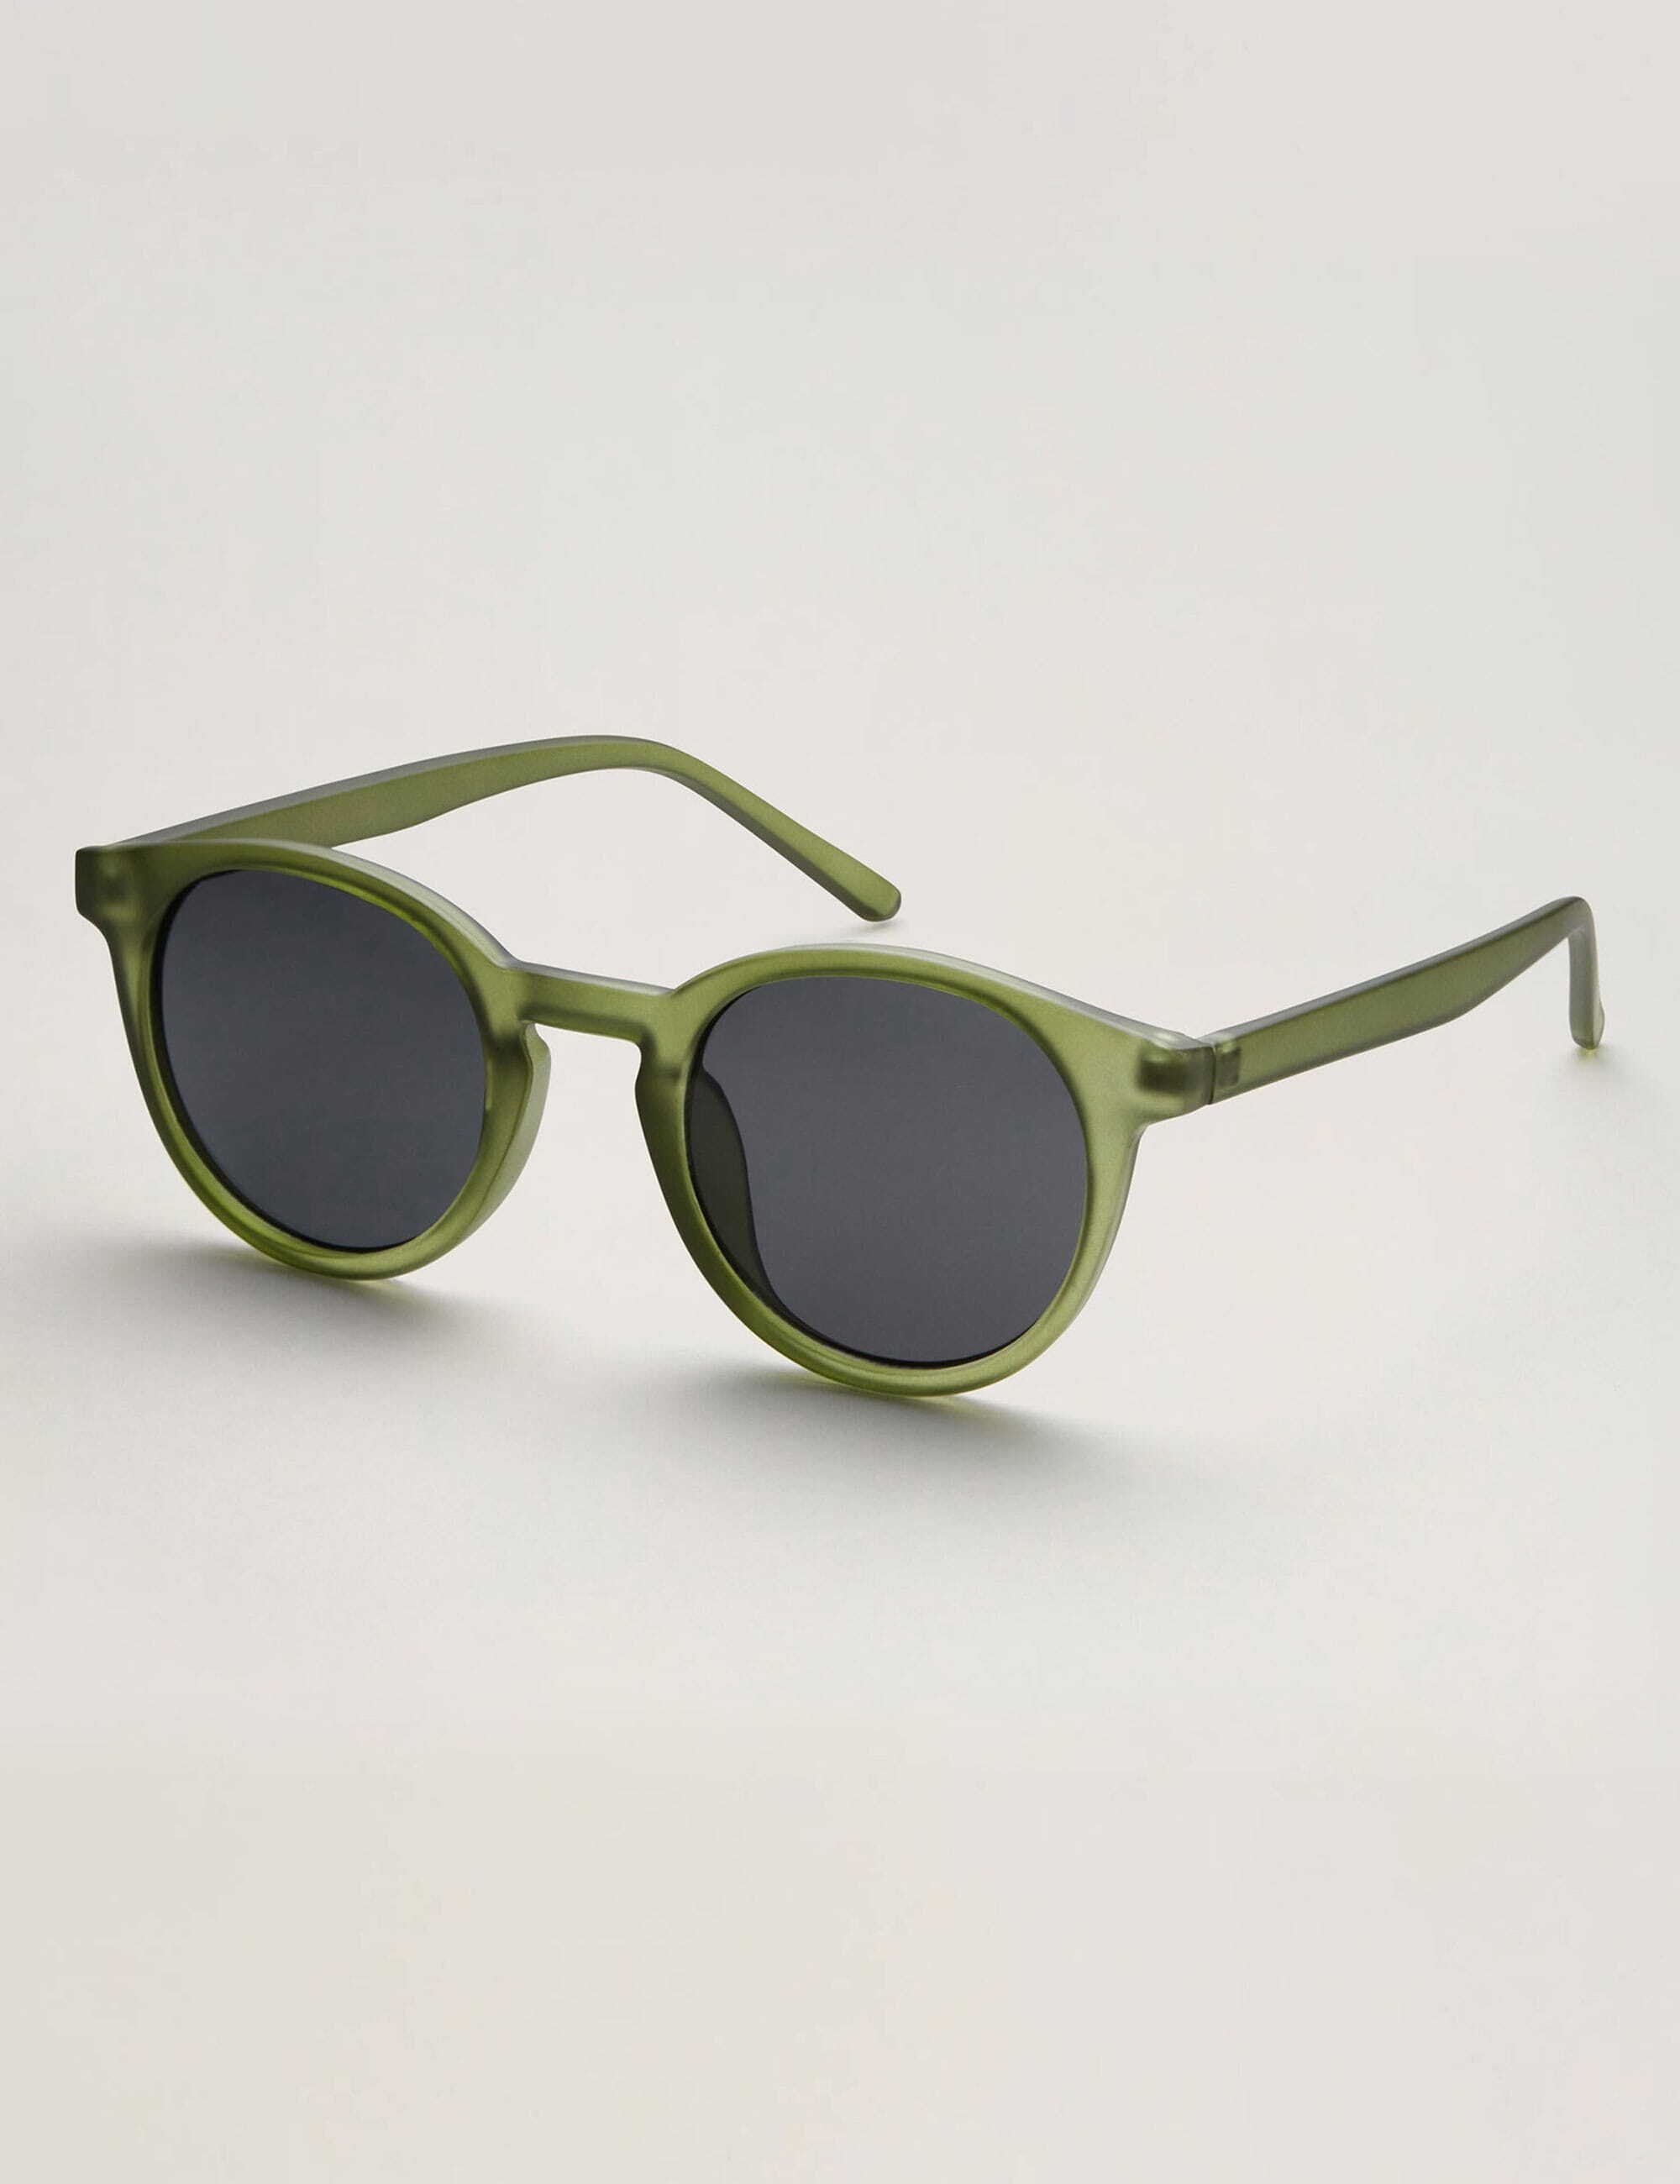 Sonnenbrille Sonnenbrille grün BabyMocs